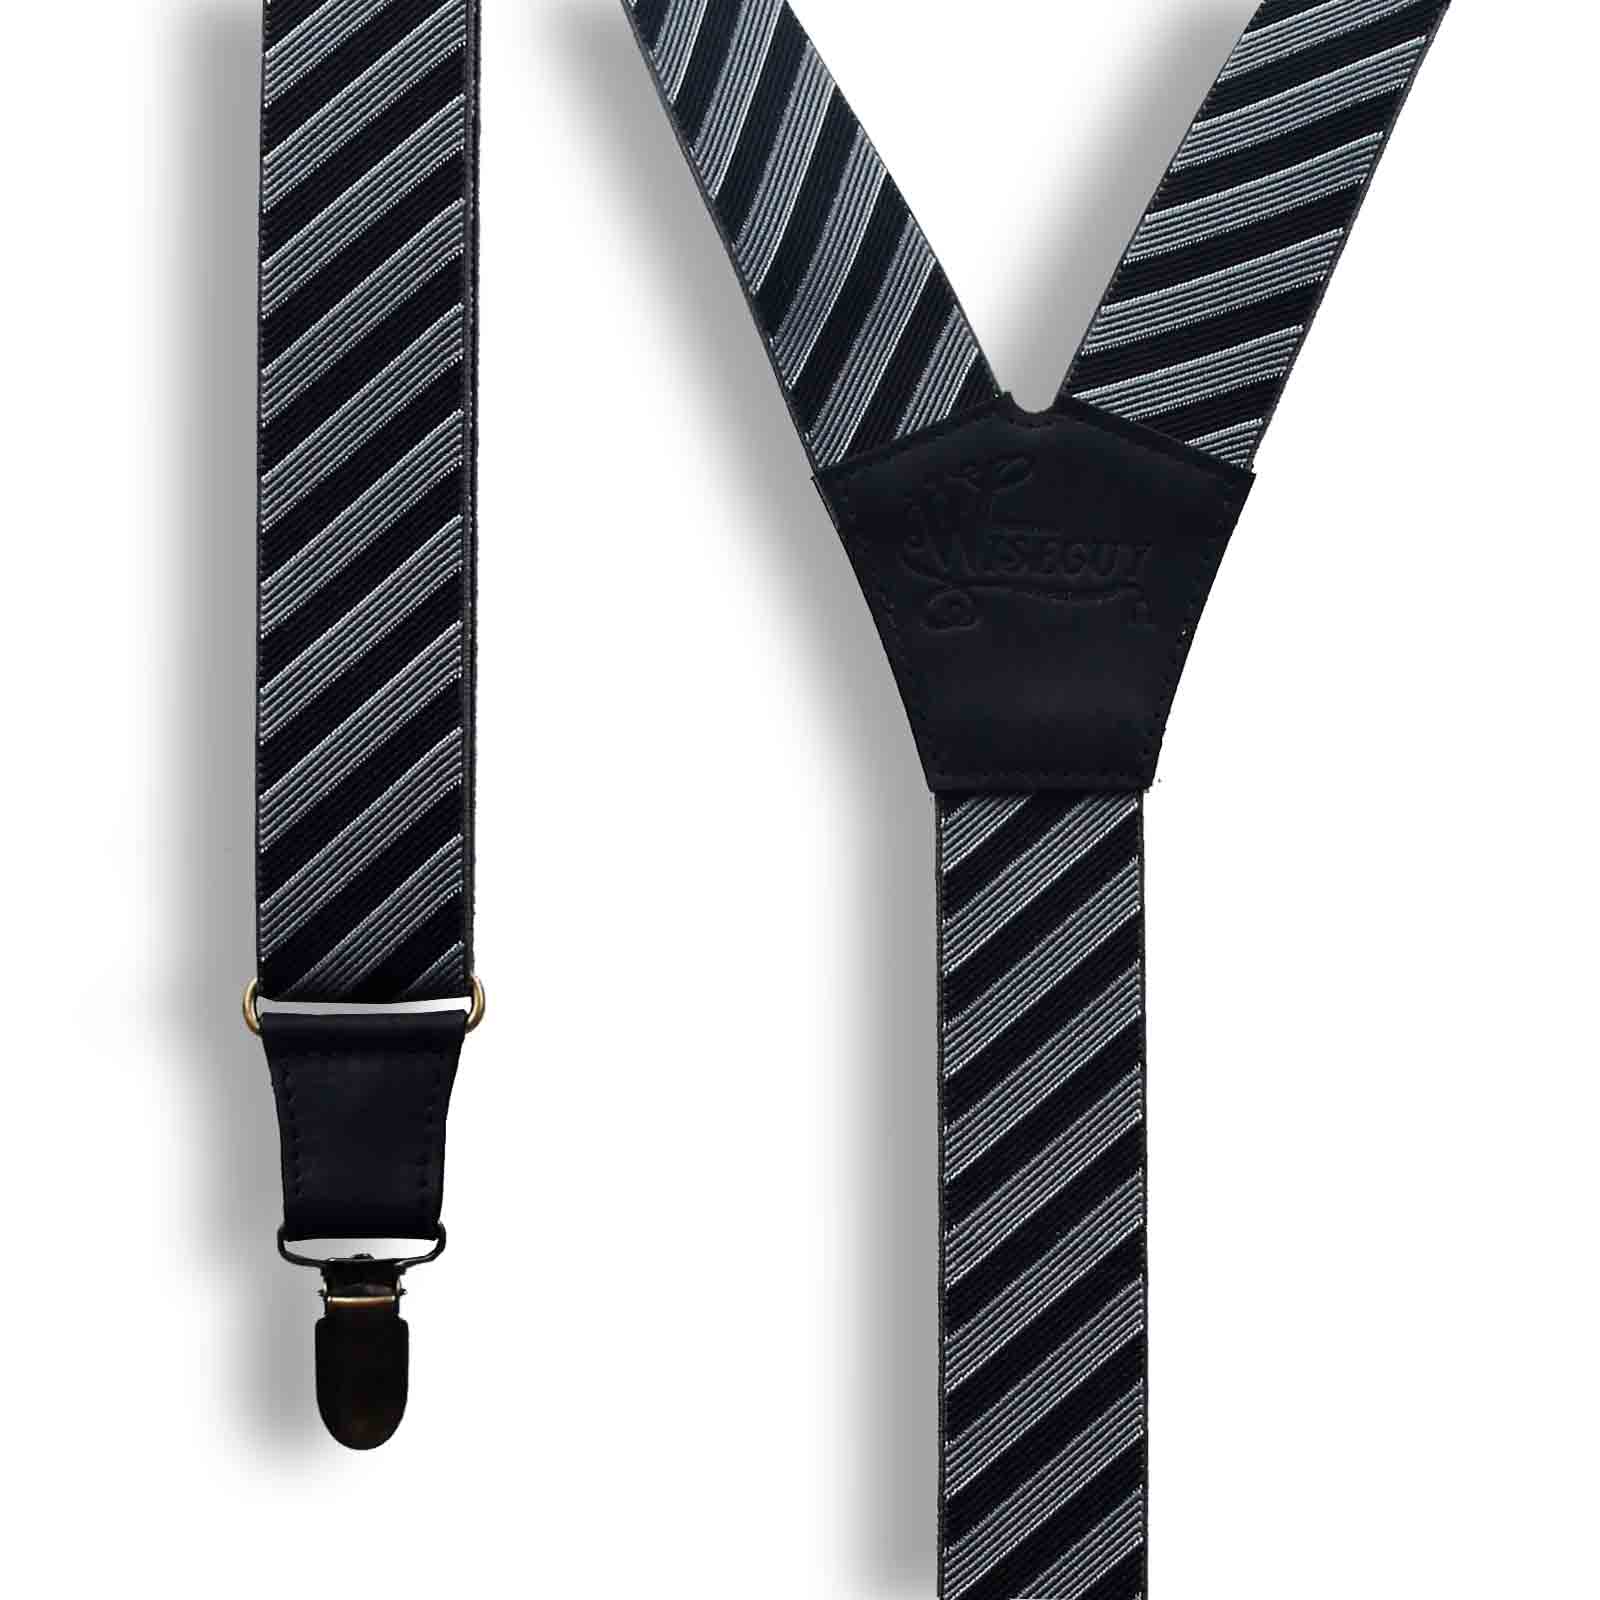 Bartender Striped wedding Suspenders for formal events 1.3 inch wide - Wiseguy Suspenders